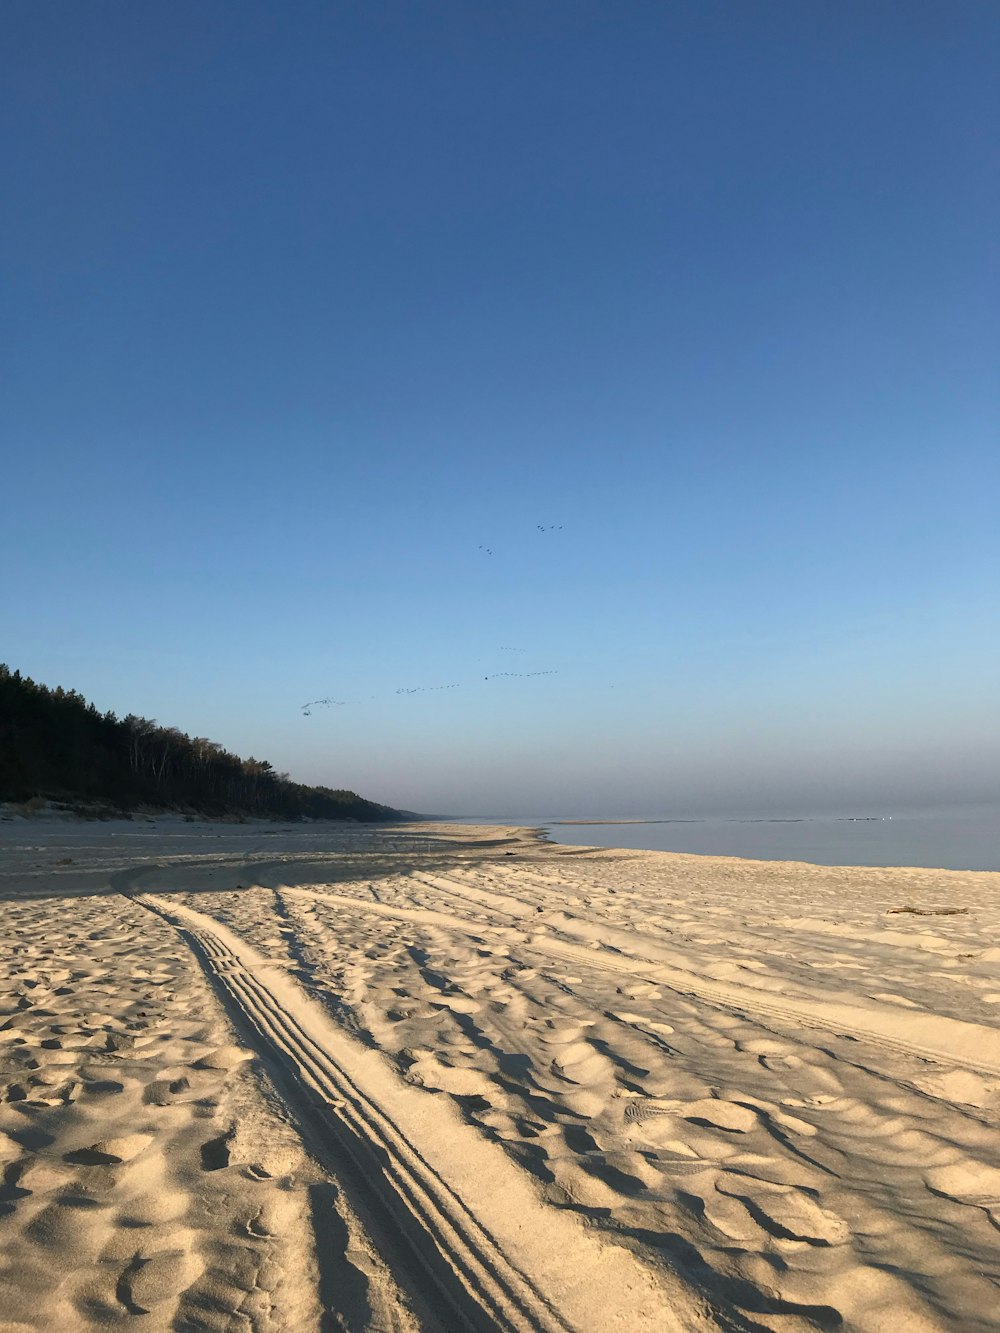 a sandy beach with a trail